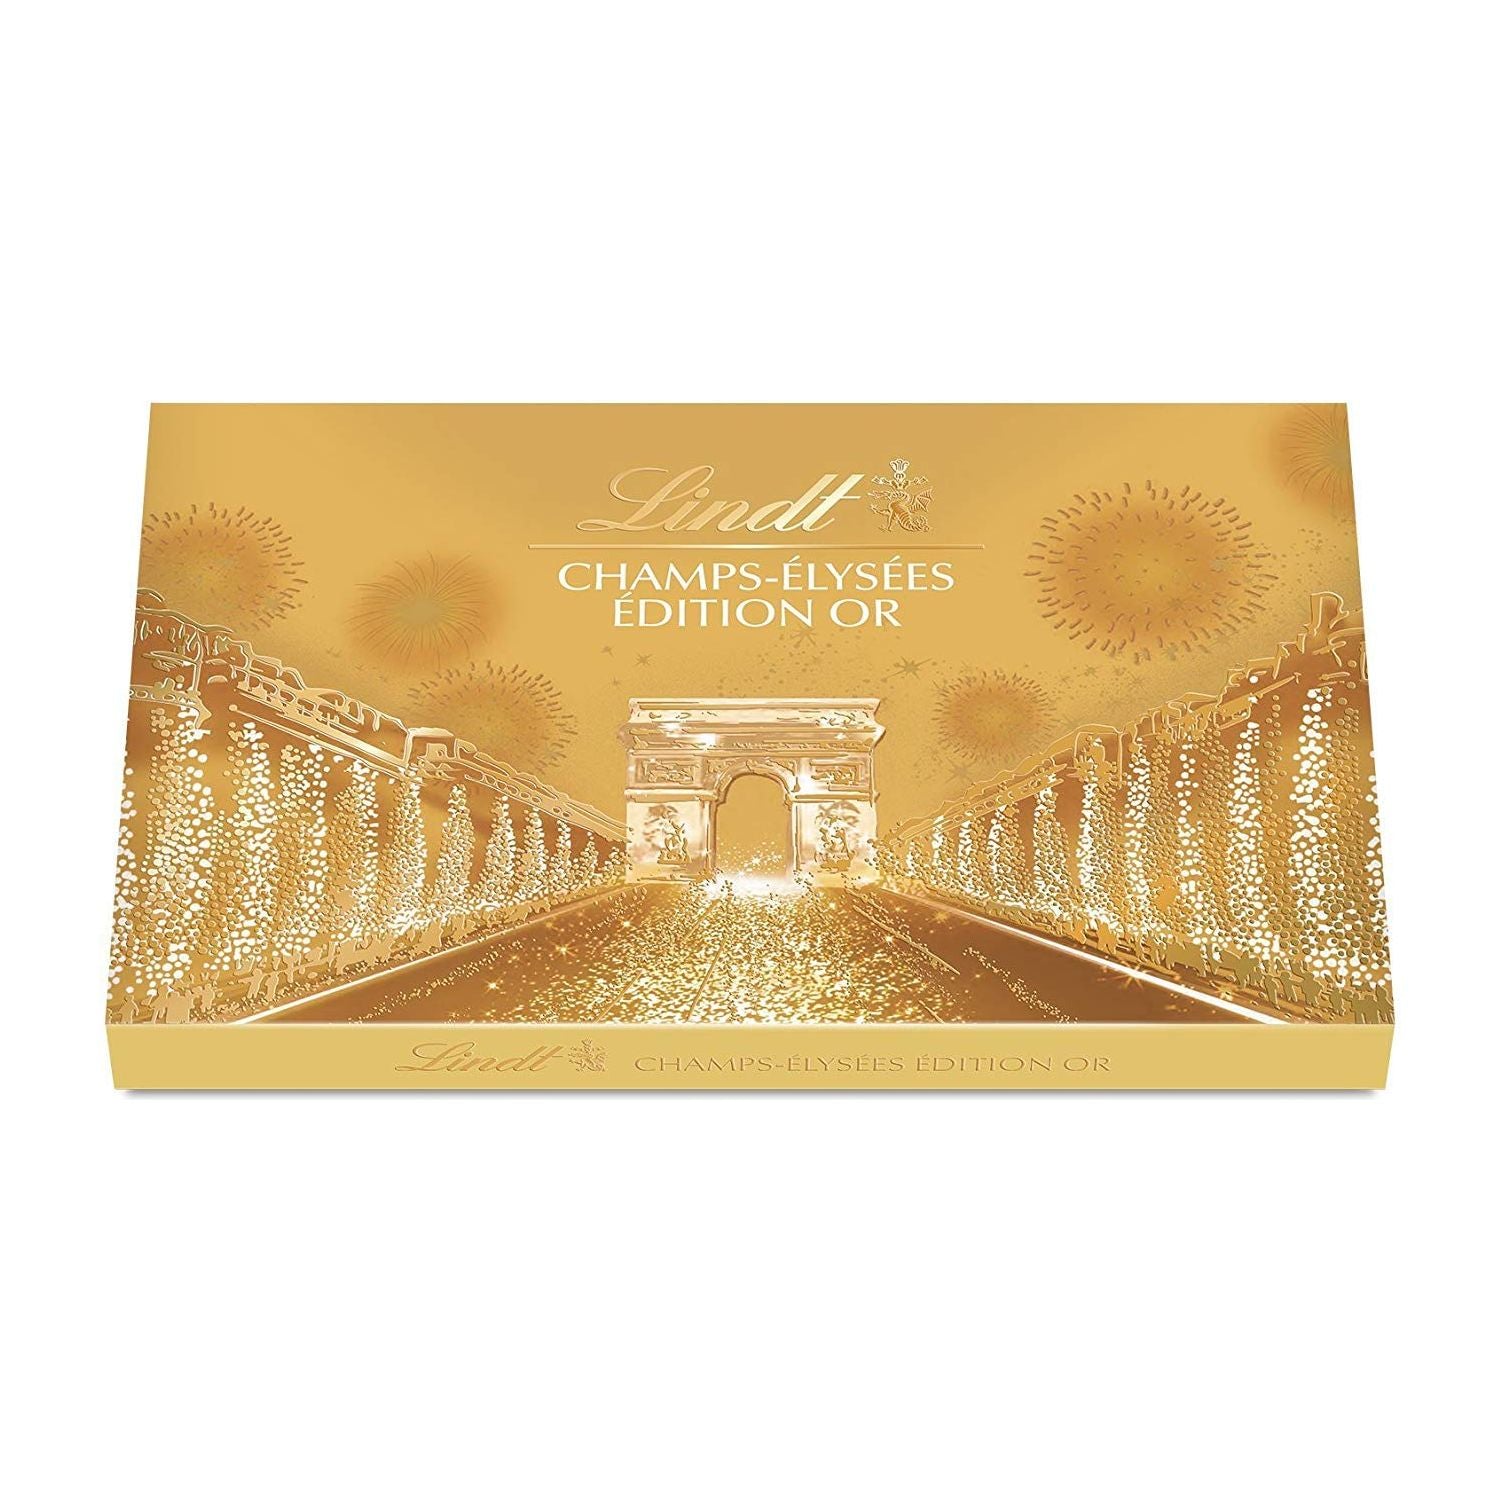 Lindt Champs Elysées Chocolate Box Gourmet Milk and Dark Chocolate Assortment 17 Chocolates 6.4oz Gold Box.